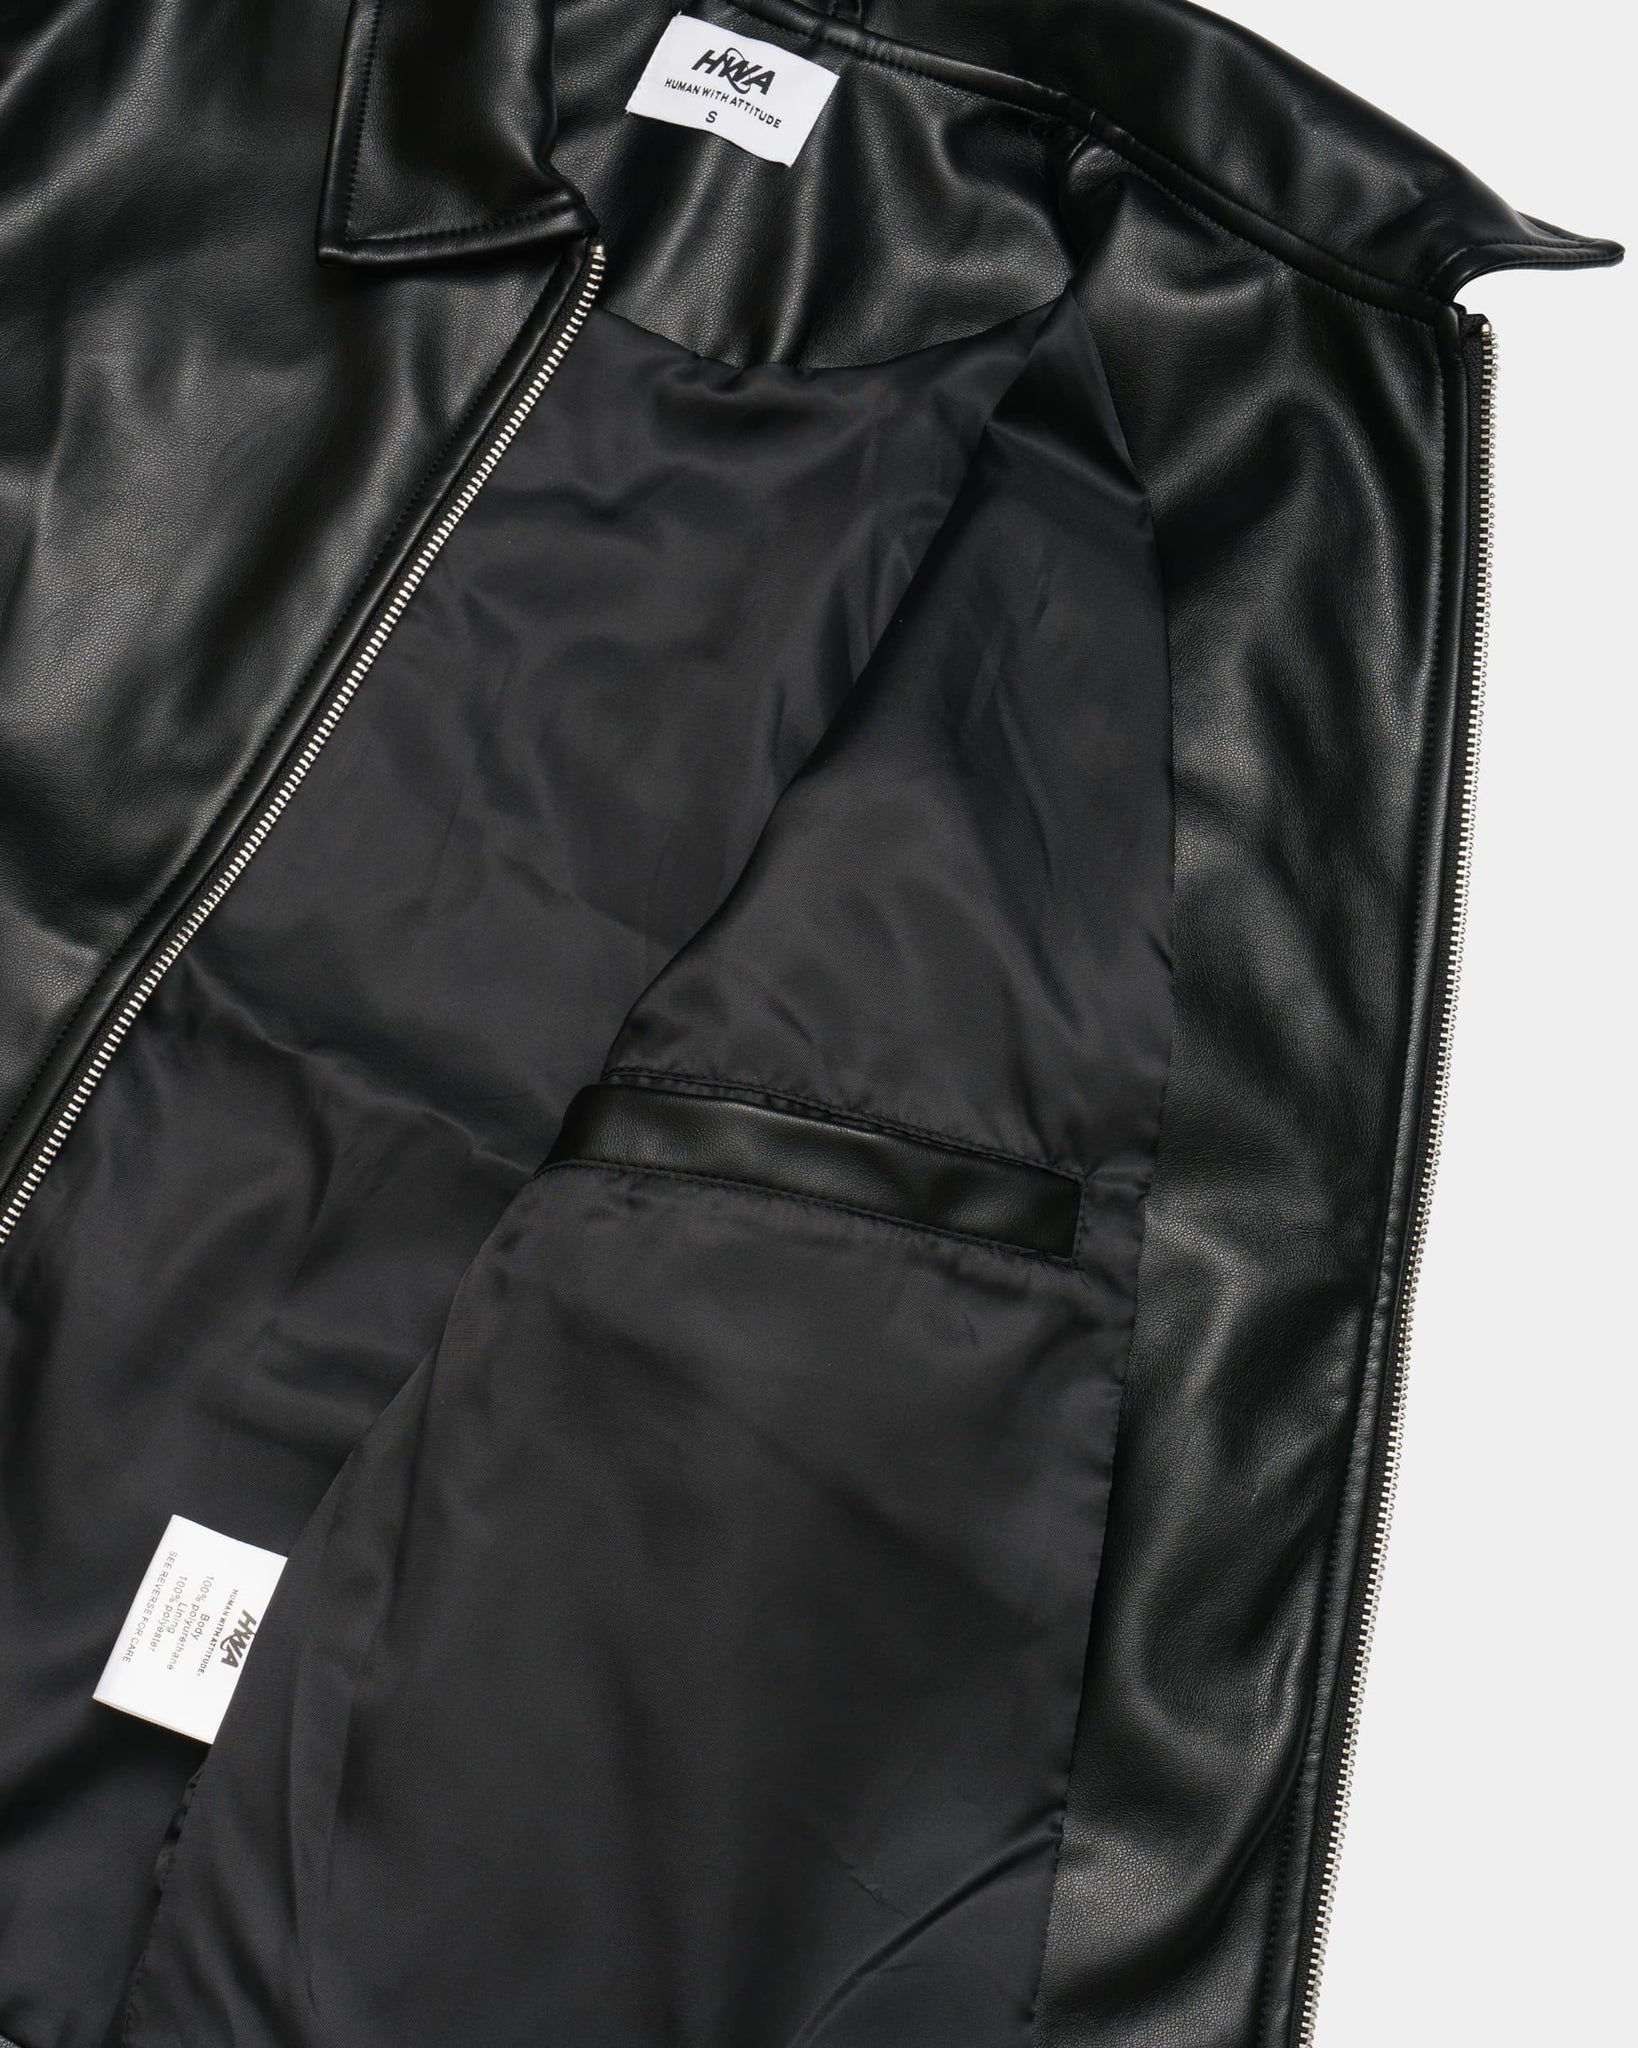 Essential Leather Jacket - Black